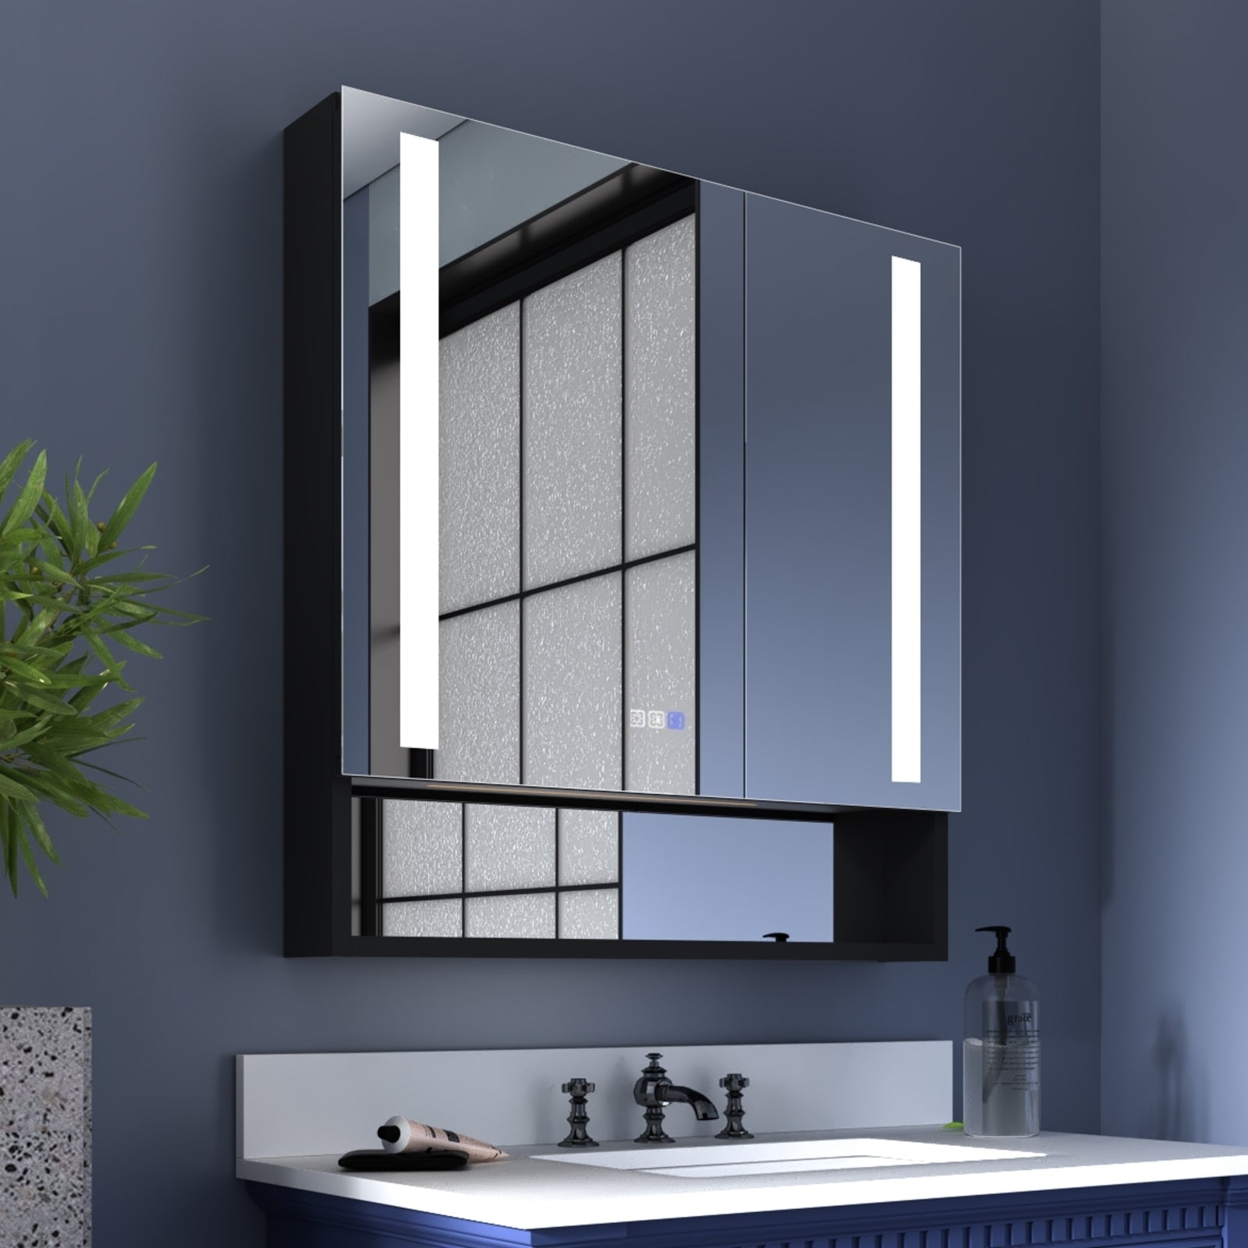 ExBrite 30 x 32 inch Bathroom Mirror Medicine Cabinet with Lights Double Door Recessed or Surface Mount,Defog